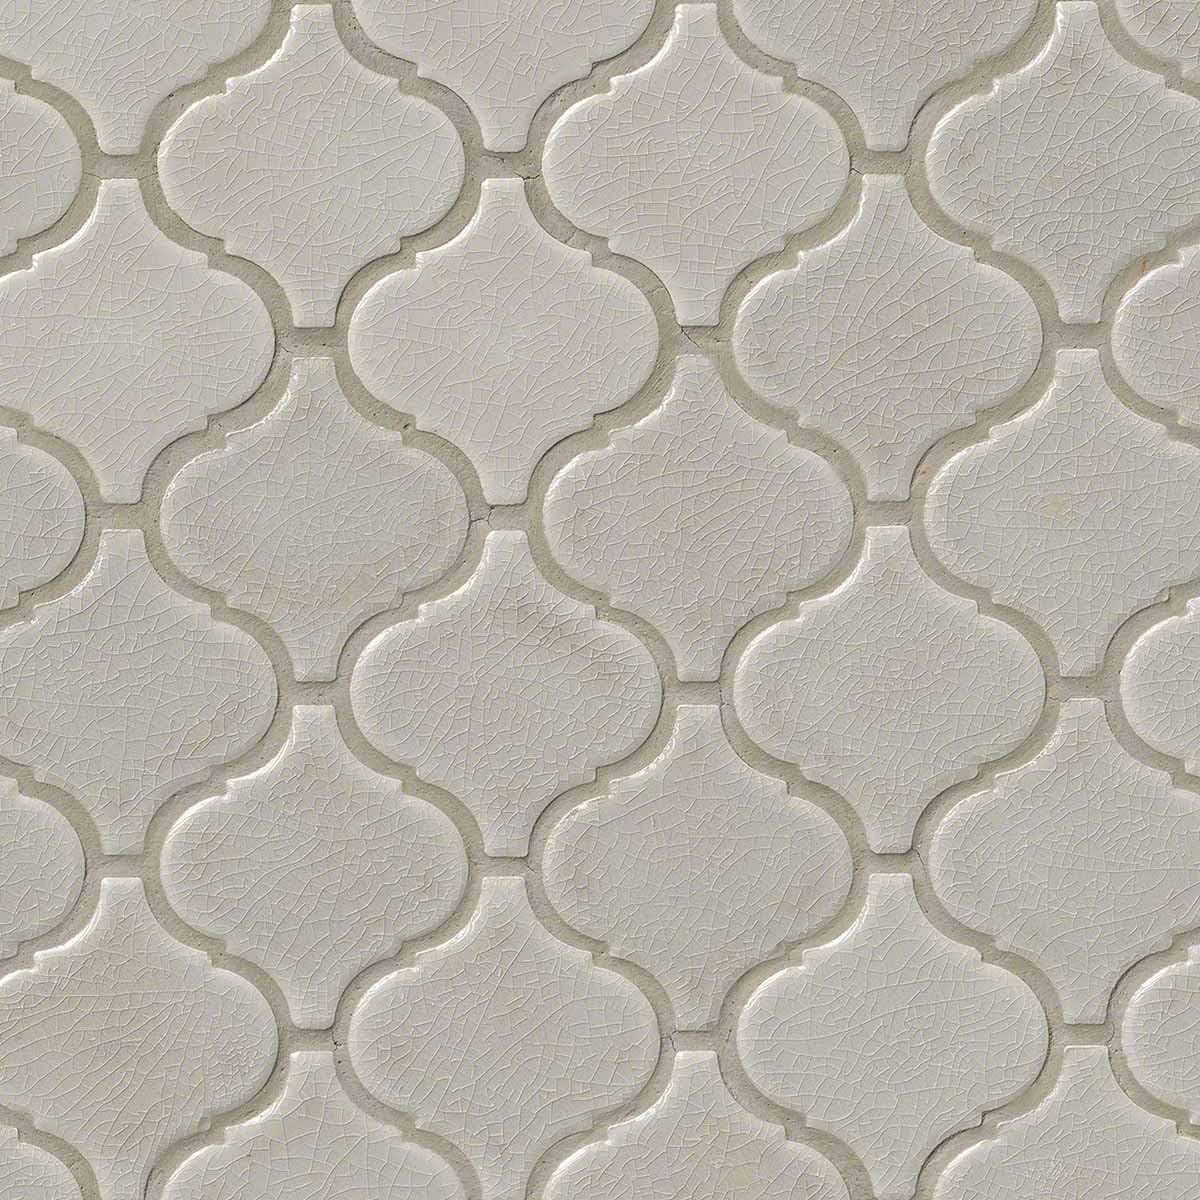 MS International SMOT-PT ARABESQ Fog Arabesque 6mm Wall Tile 15 Piece